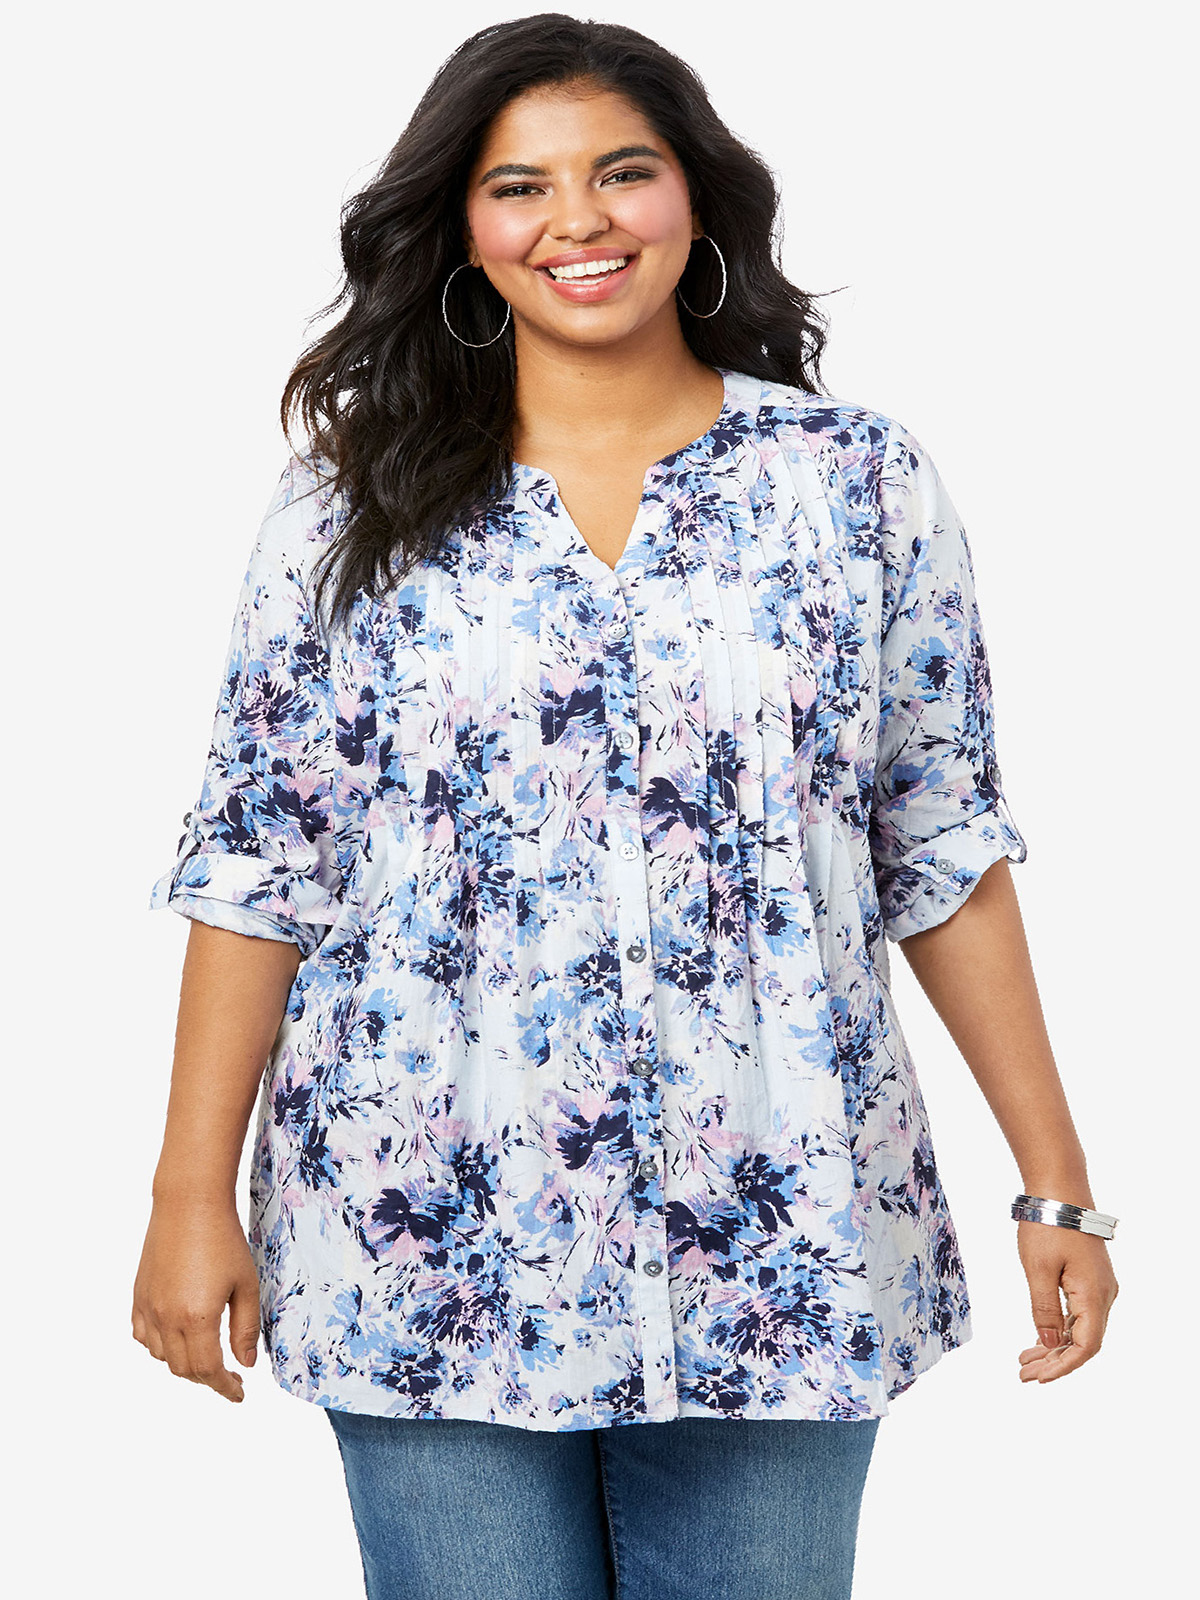 Roaman's - - Roamans BLUE English Floral Big Shirt - Plus Size 14 to 28 ...